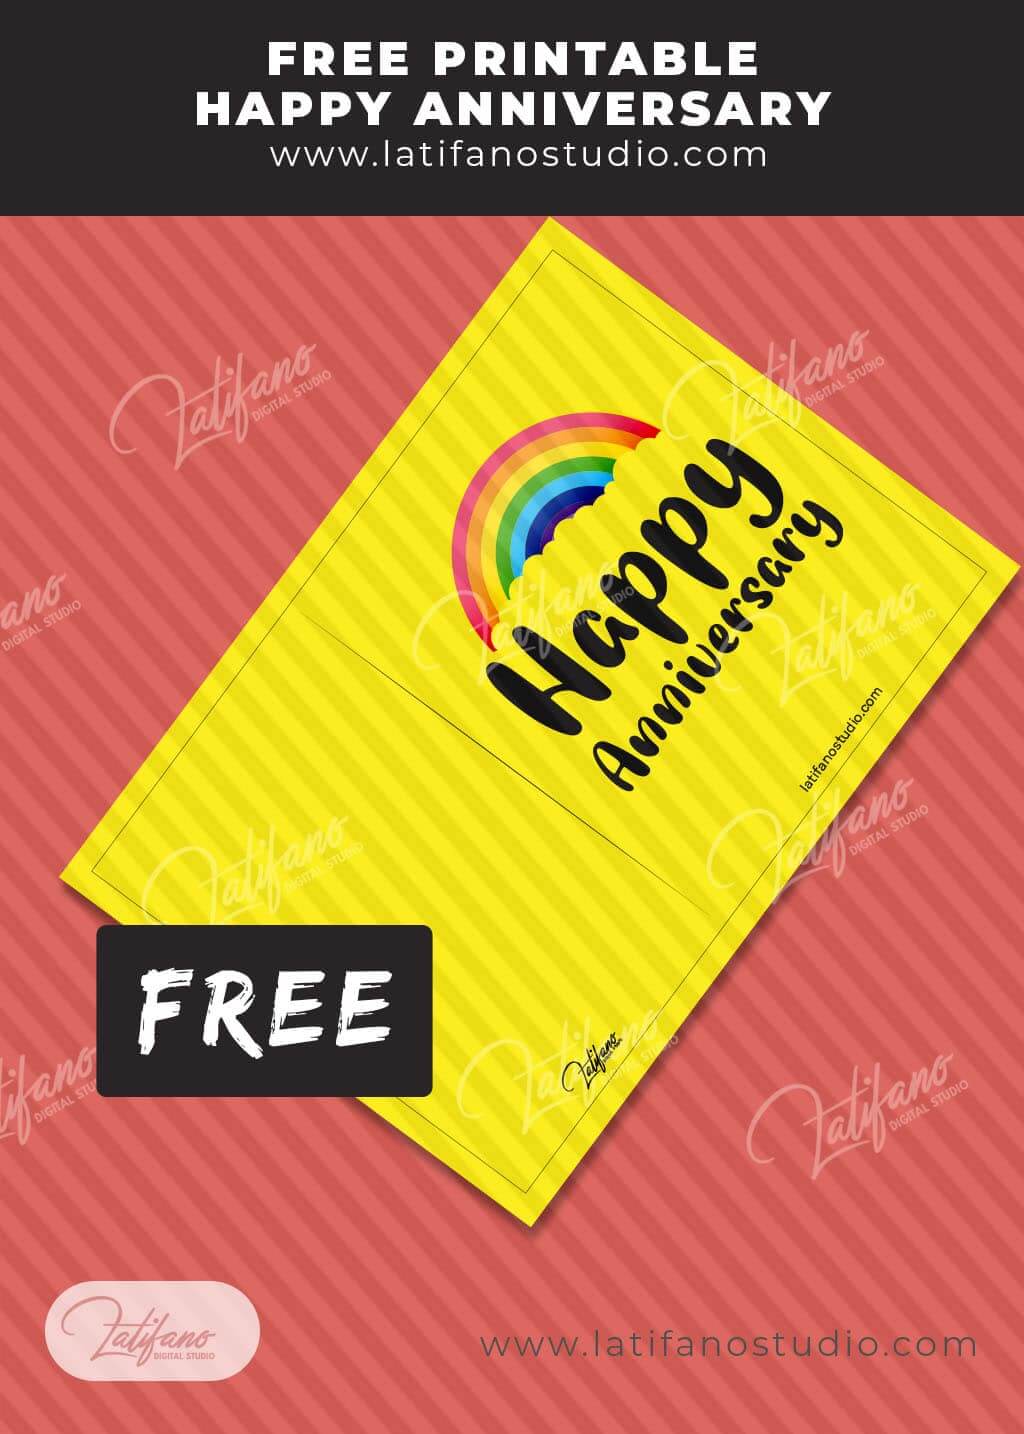 Free Printable card Happy anniversary